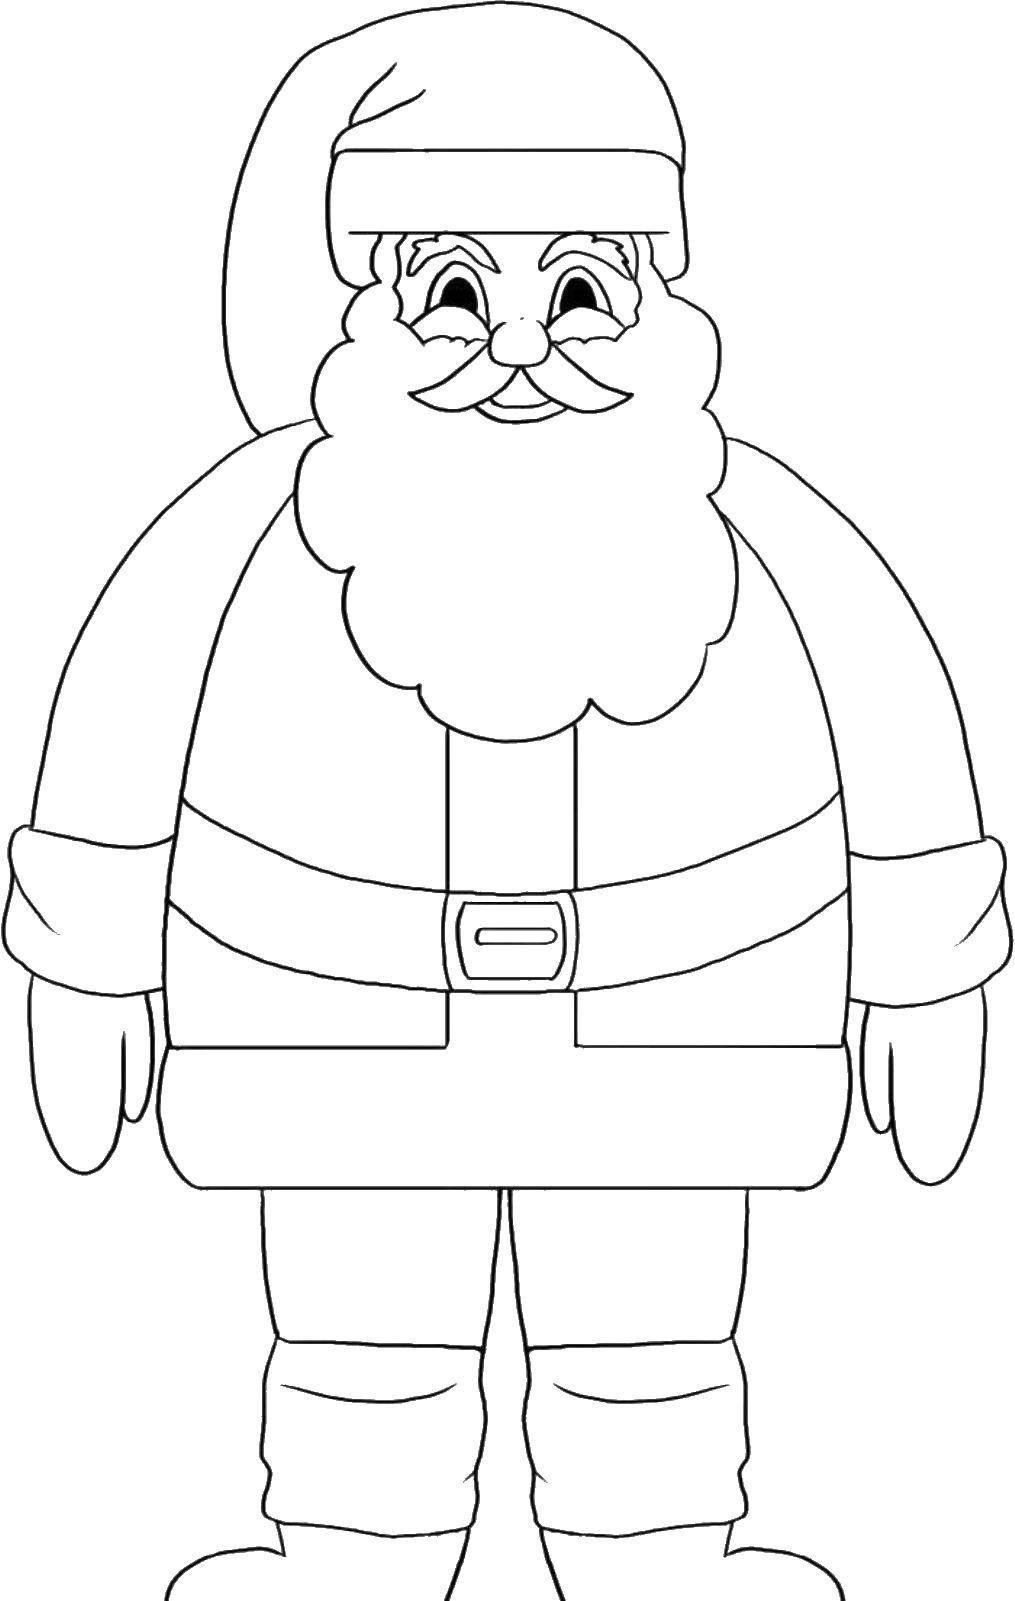 Coloring Outline of Santa Claus. Category Christmas. Tags:  Santa Claus, beard, circuit.